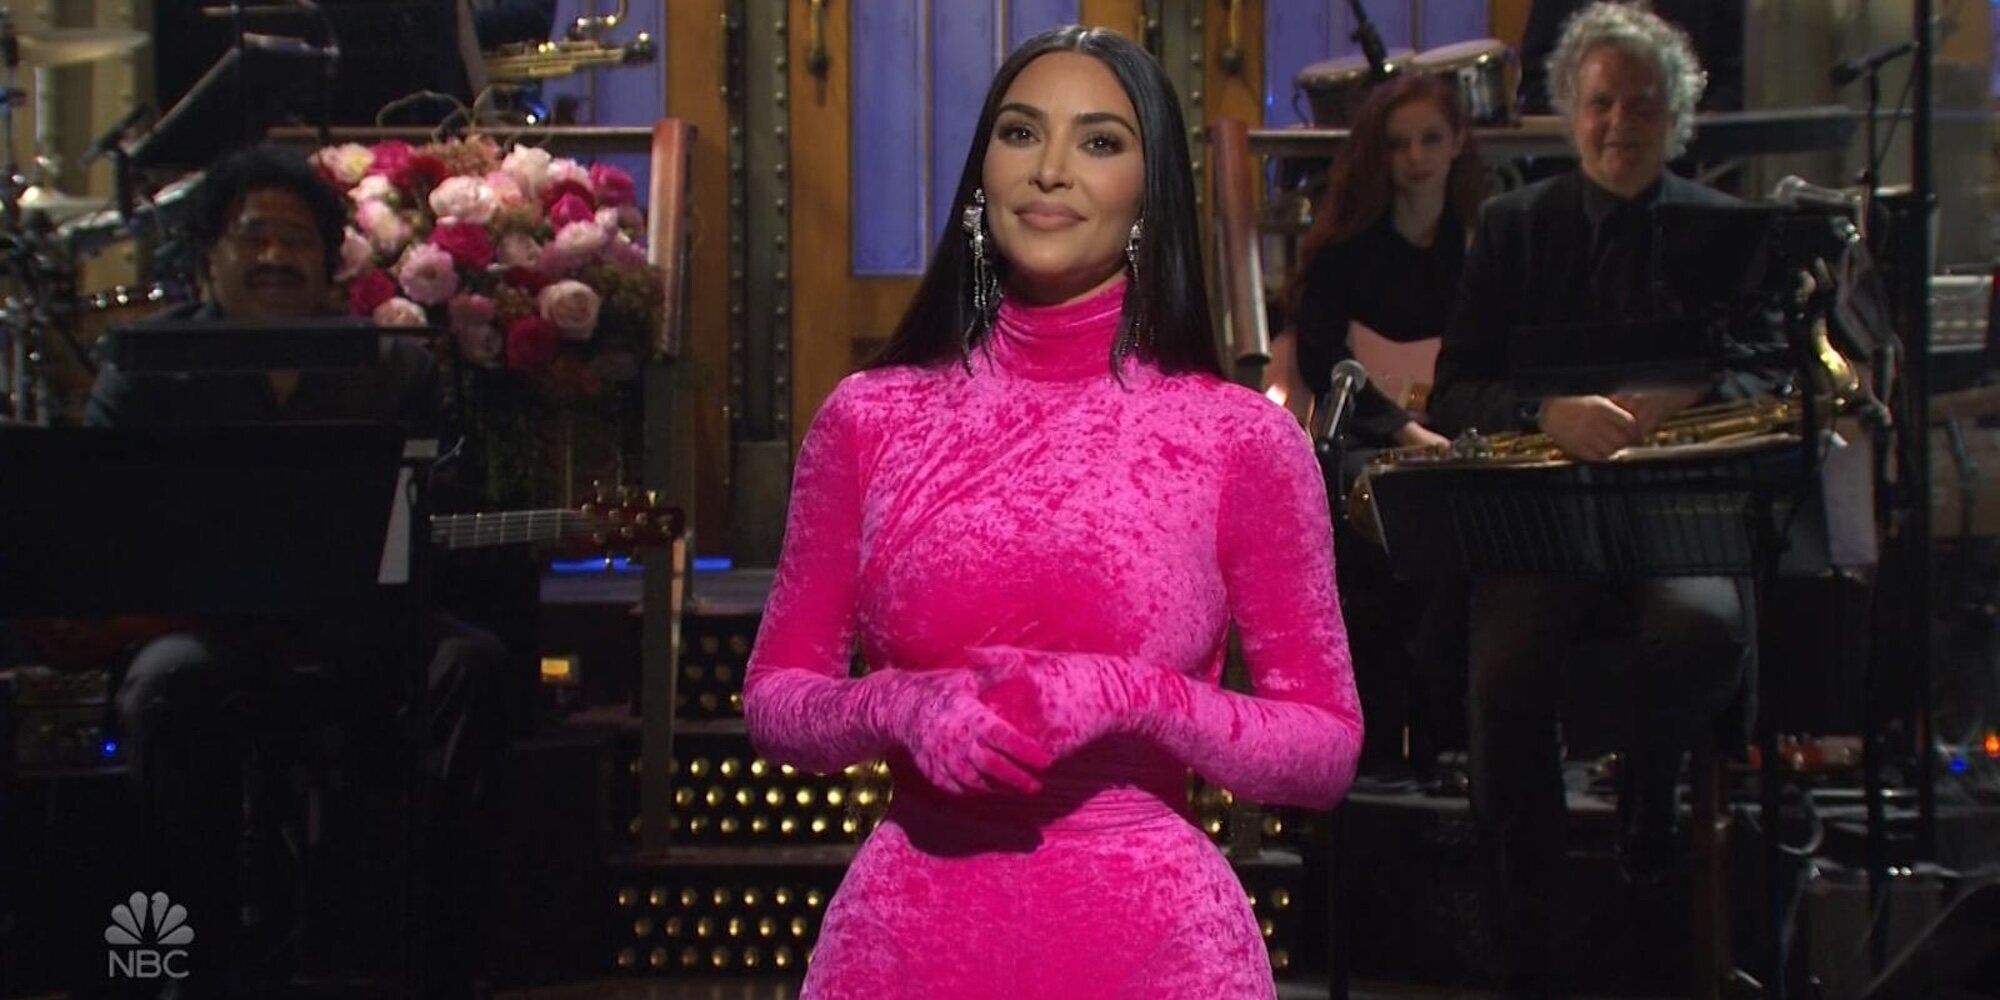 Los chistes que Kim Kardashian dejó fuera de su monólogo en 'Saturday Night Live': R. Kelly, Khlóe, Tristan Thompson...